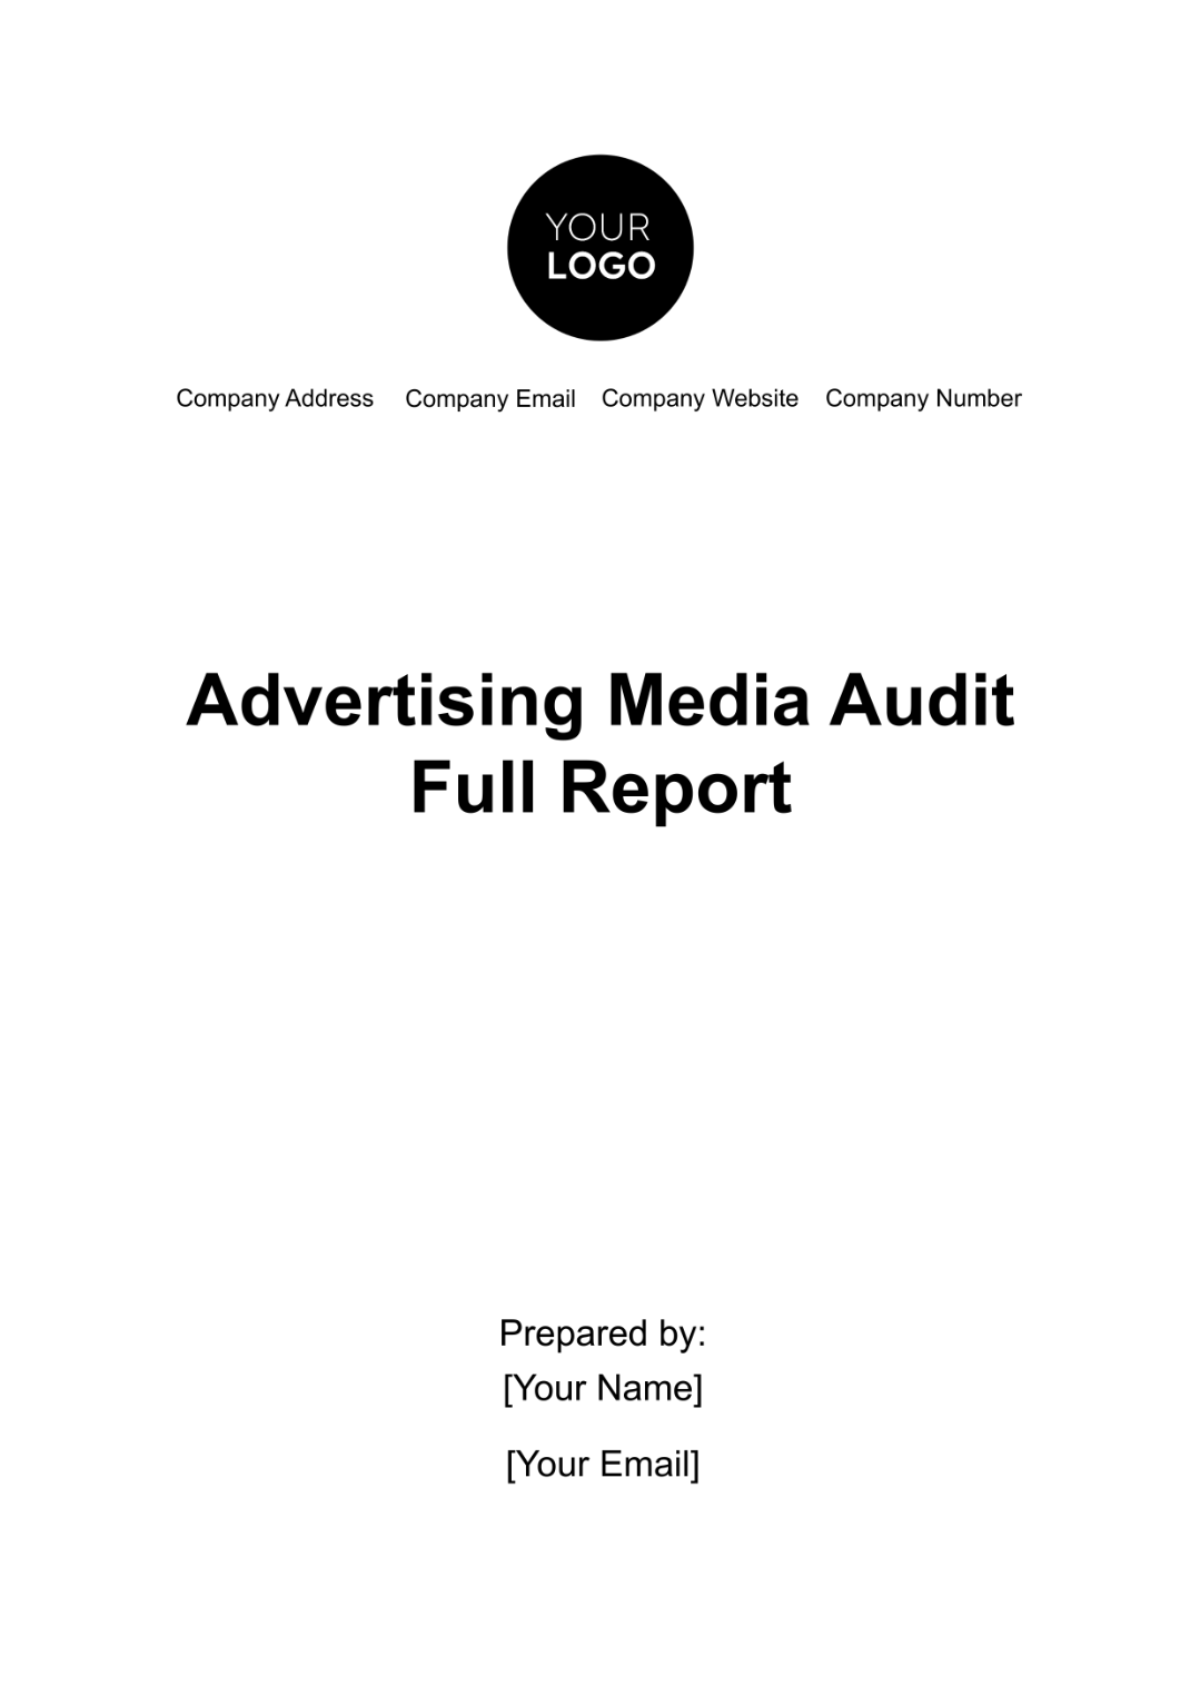 Advertising Media Audit Full Report Template